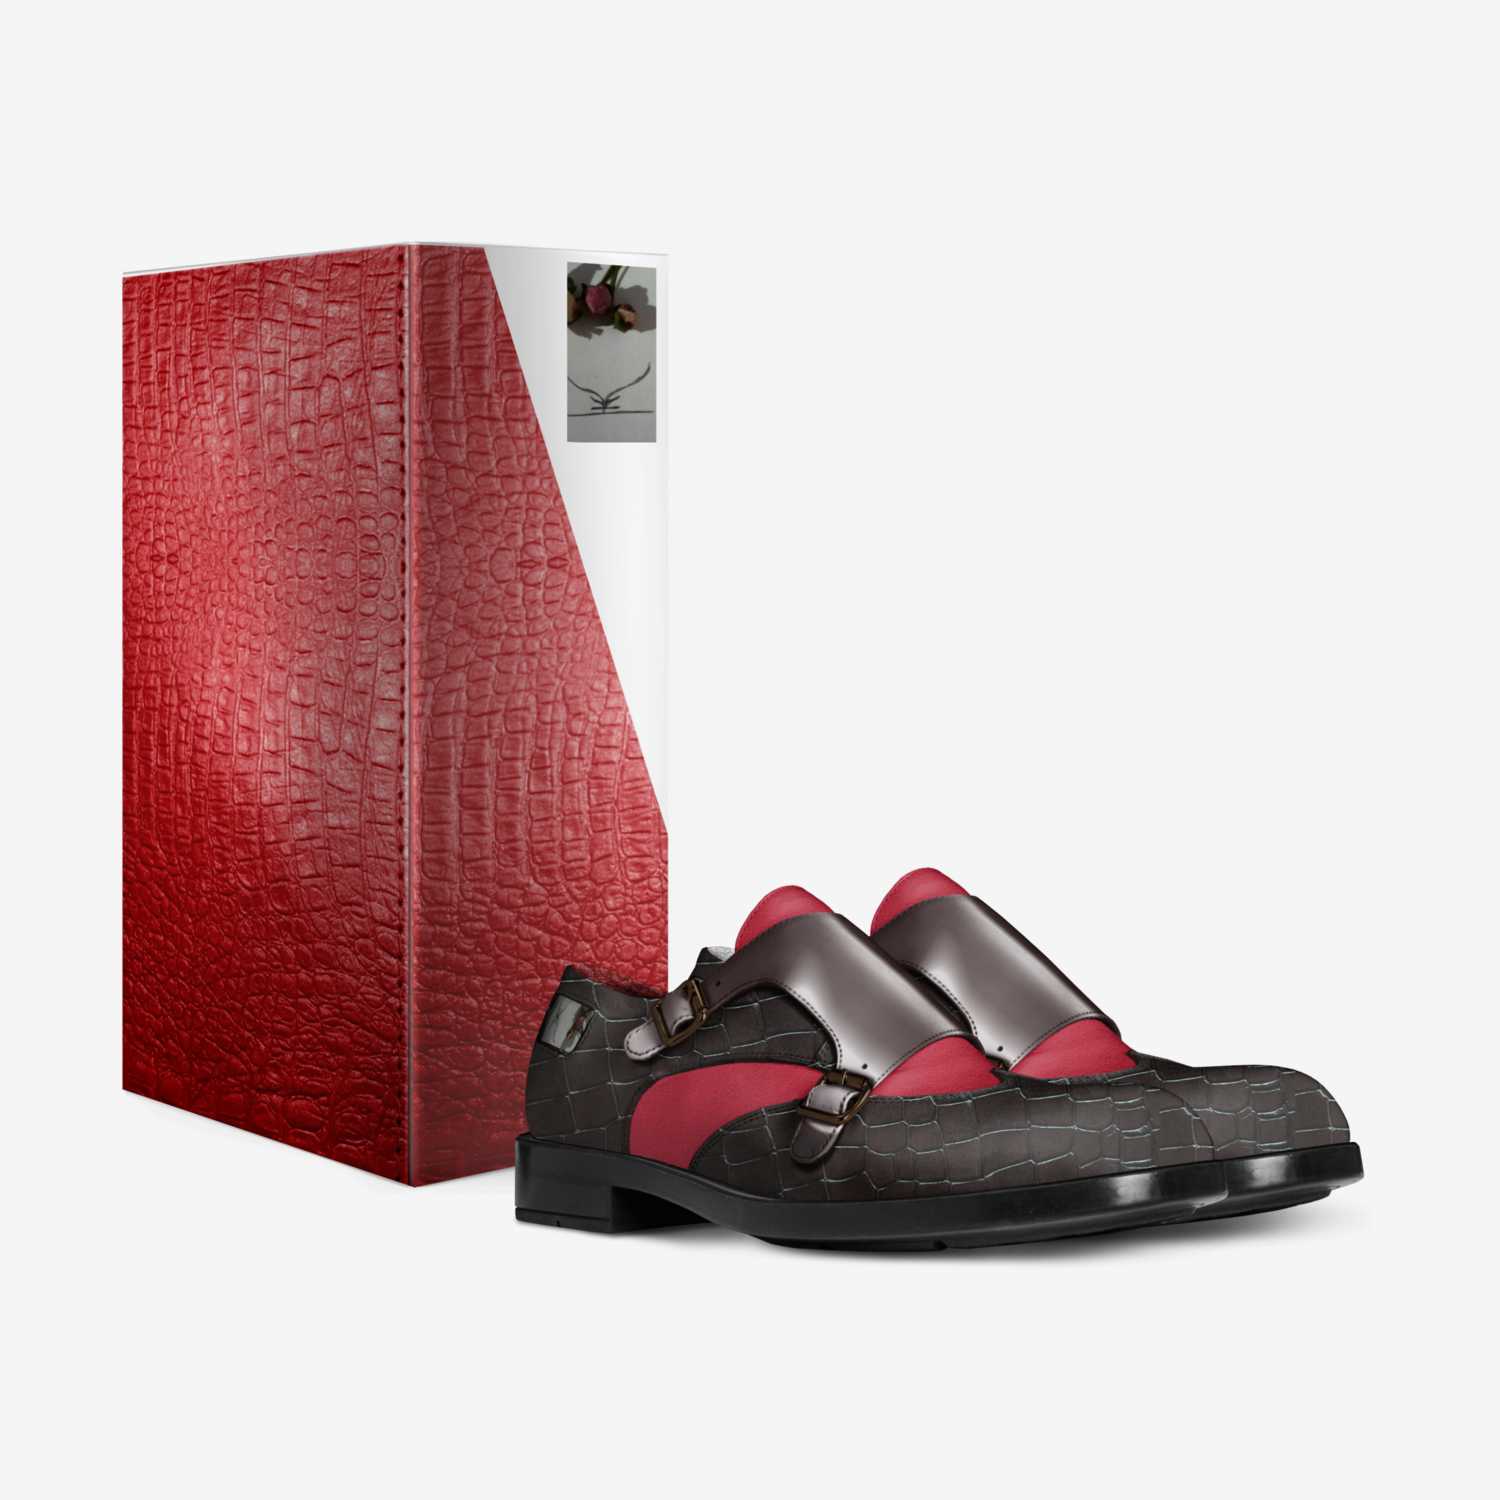 Serafim custom made in Italy shoes by House Of Karas Kutyur | Box view